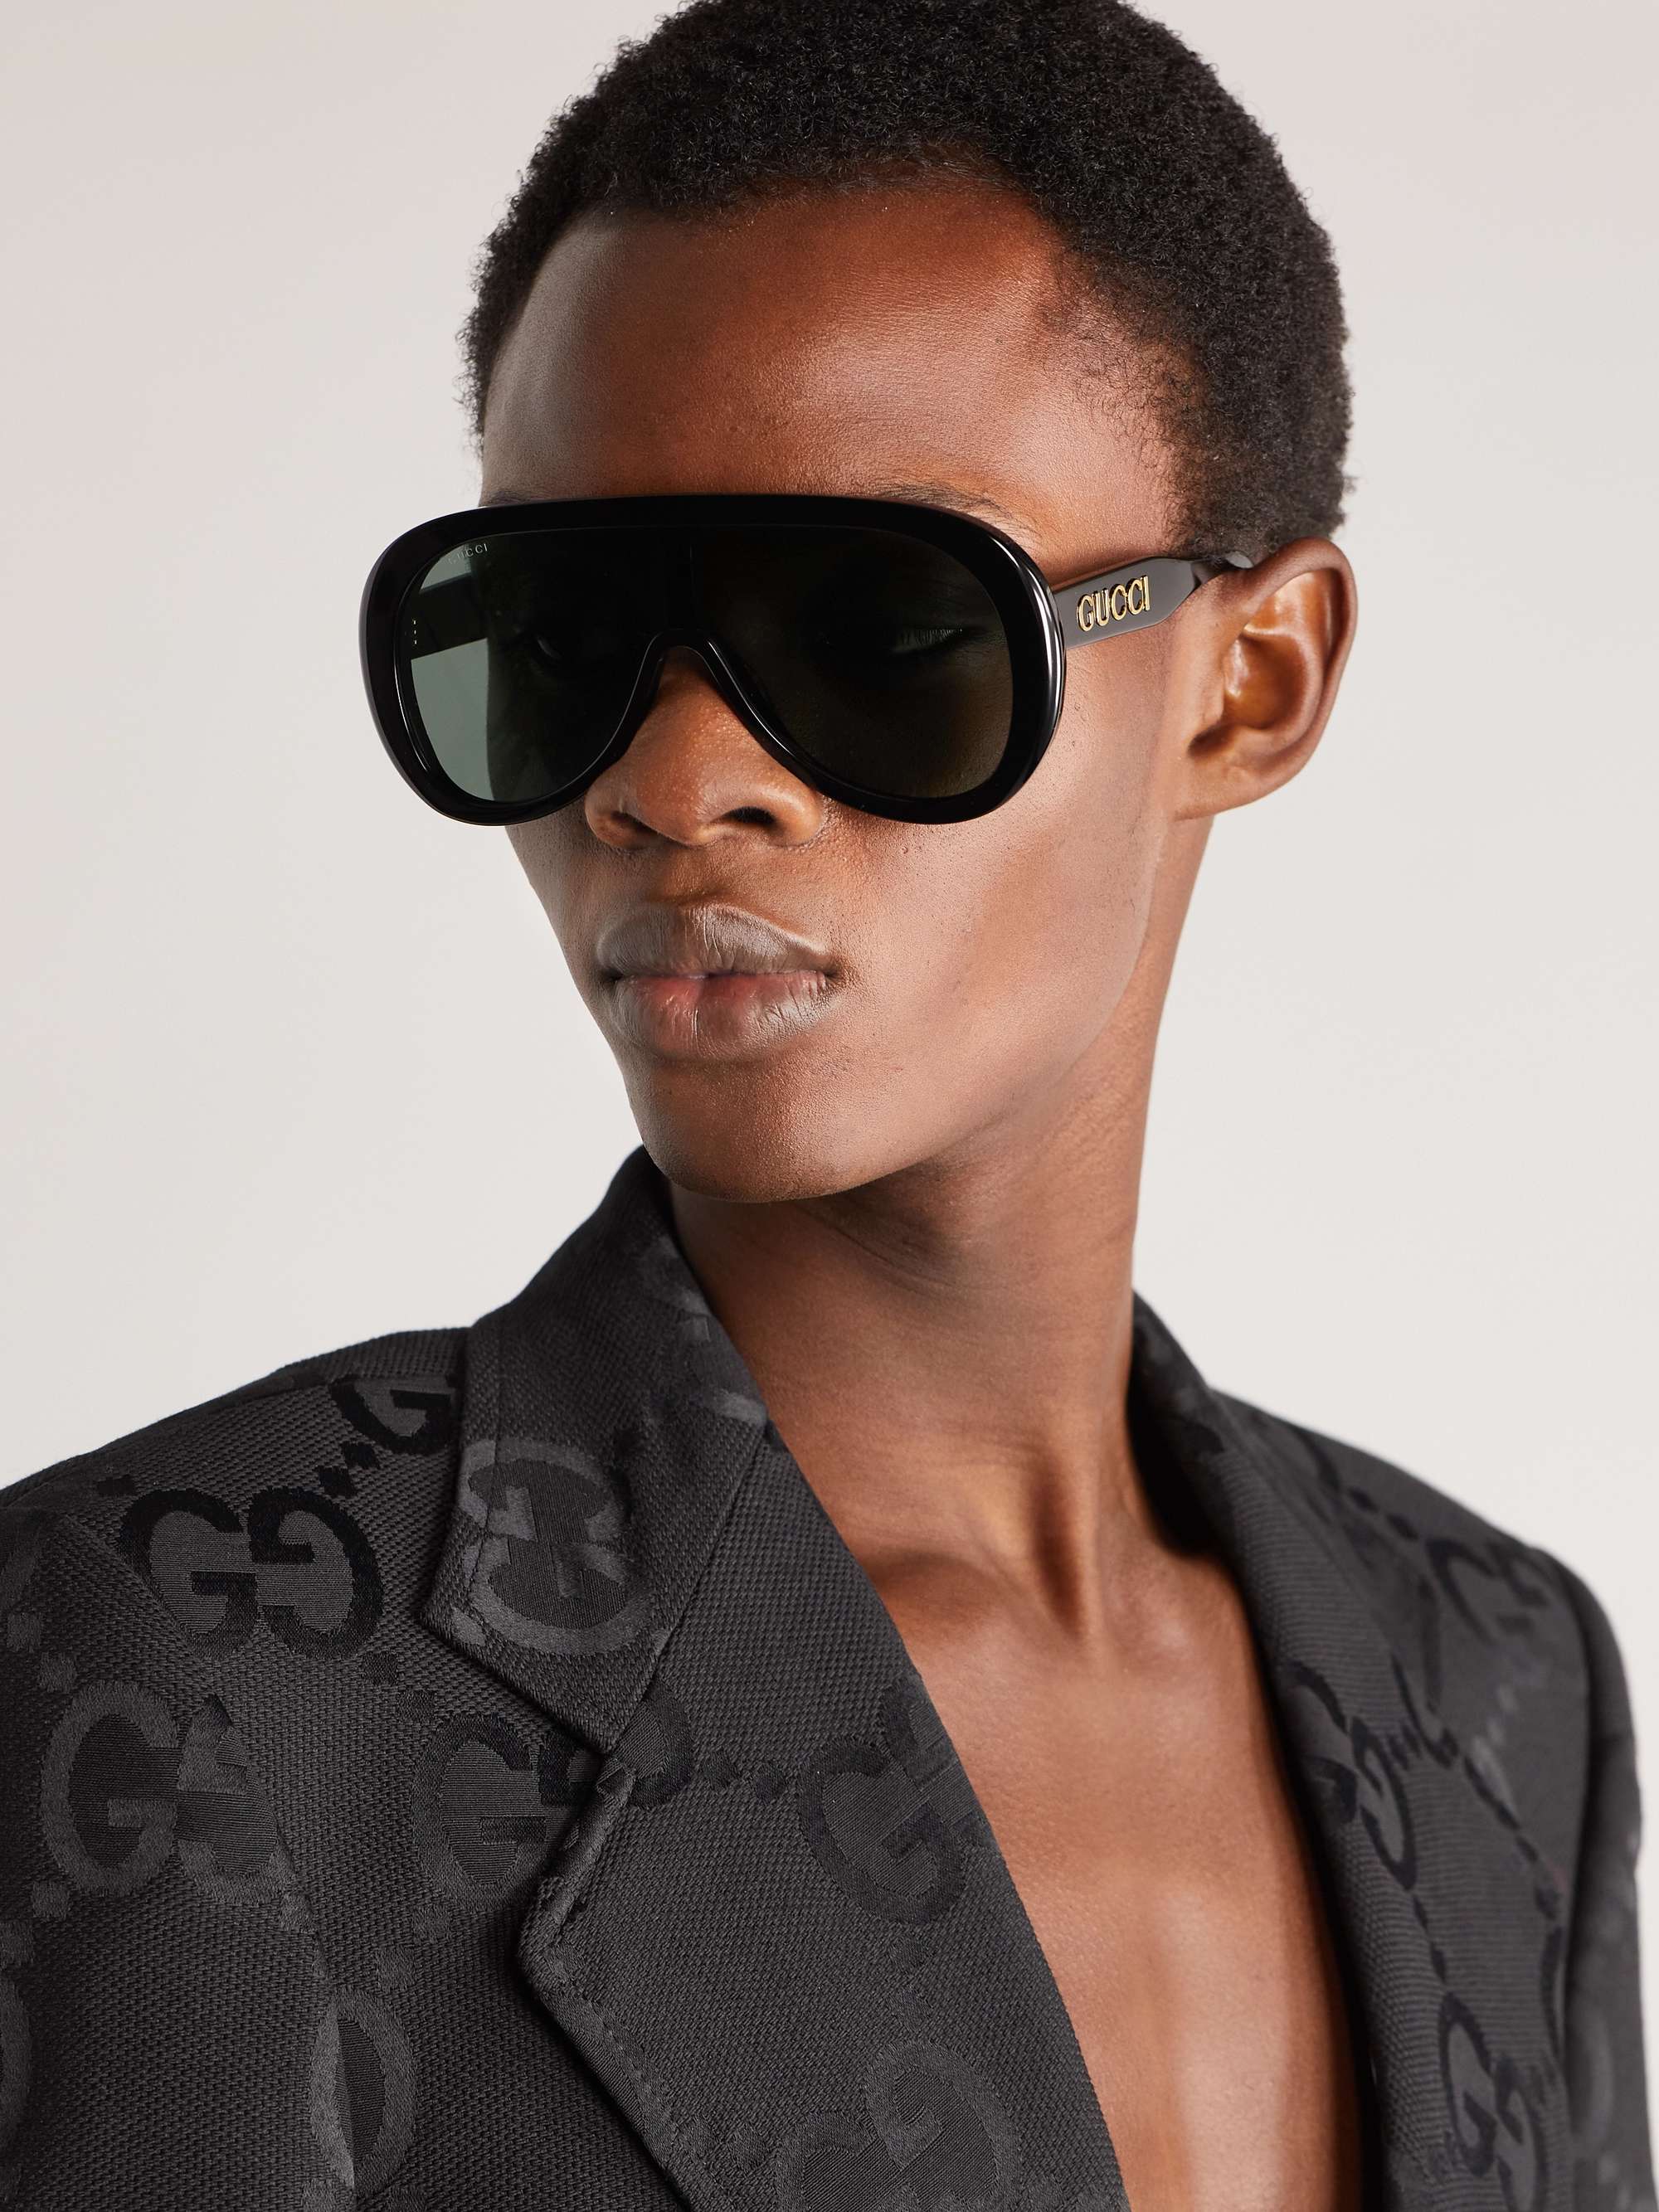 Gucci Sunglasses - black/pink/black - Zalando.co.uk-nextbuild.com.vn